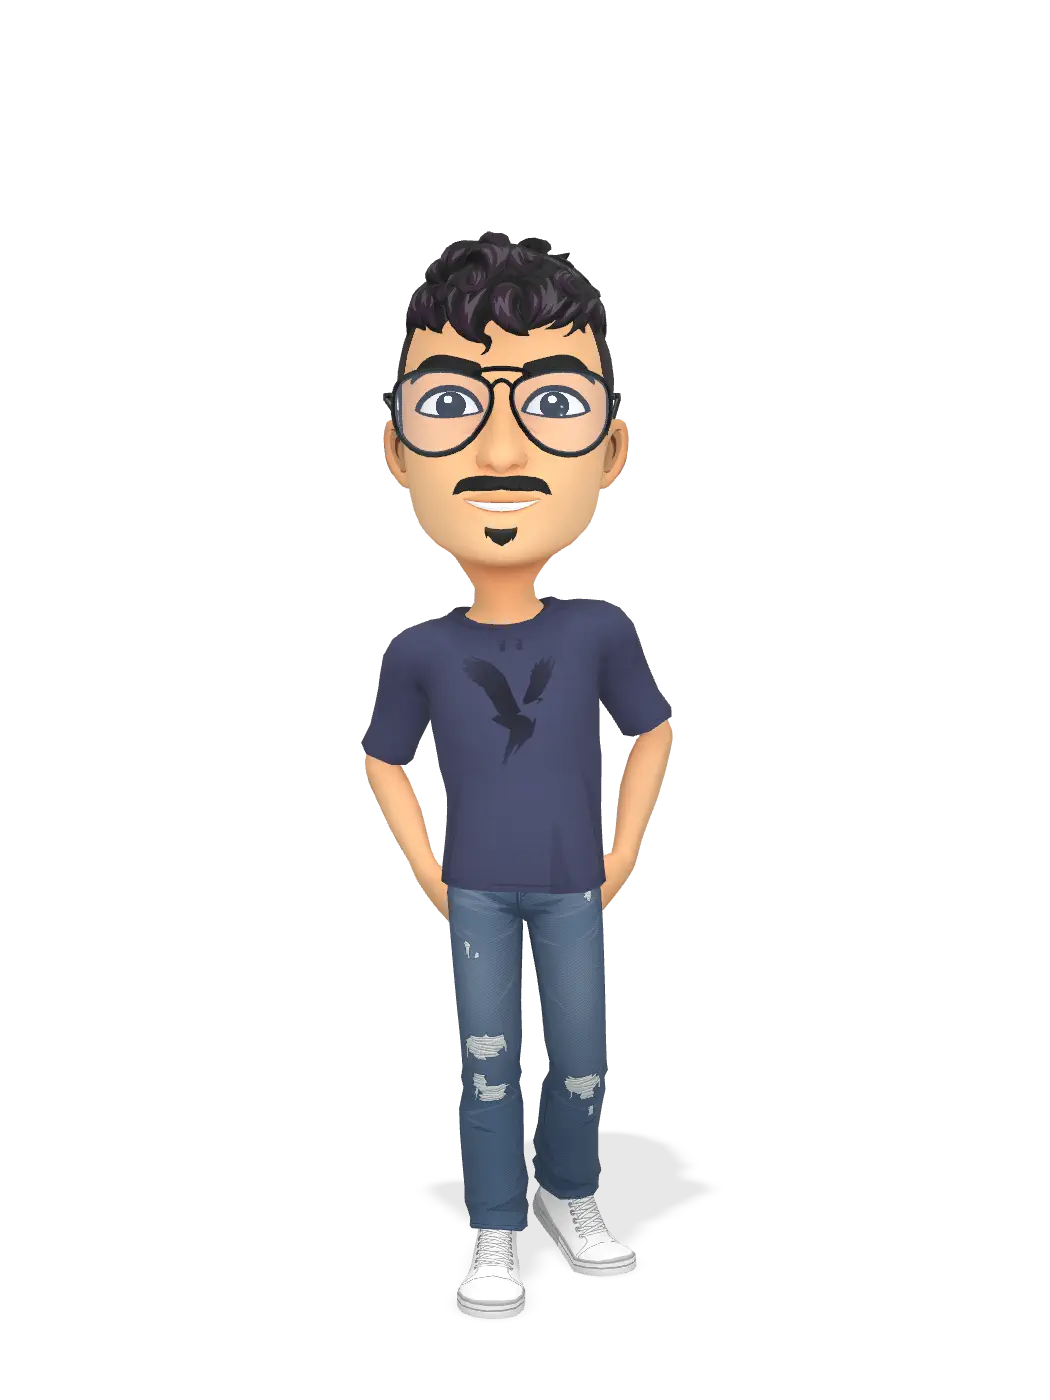 3D Bitmoji for ahmed3n1 avatar